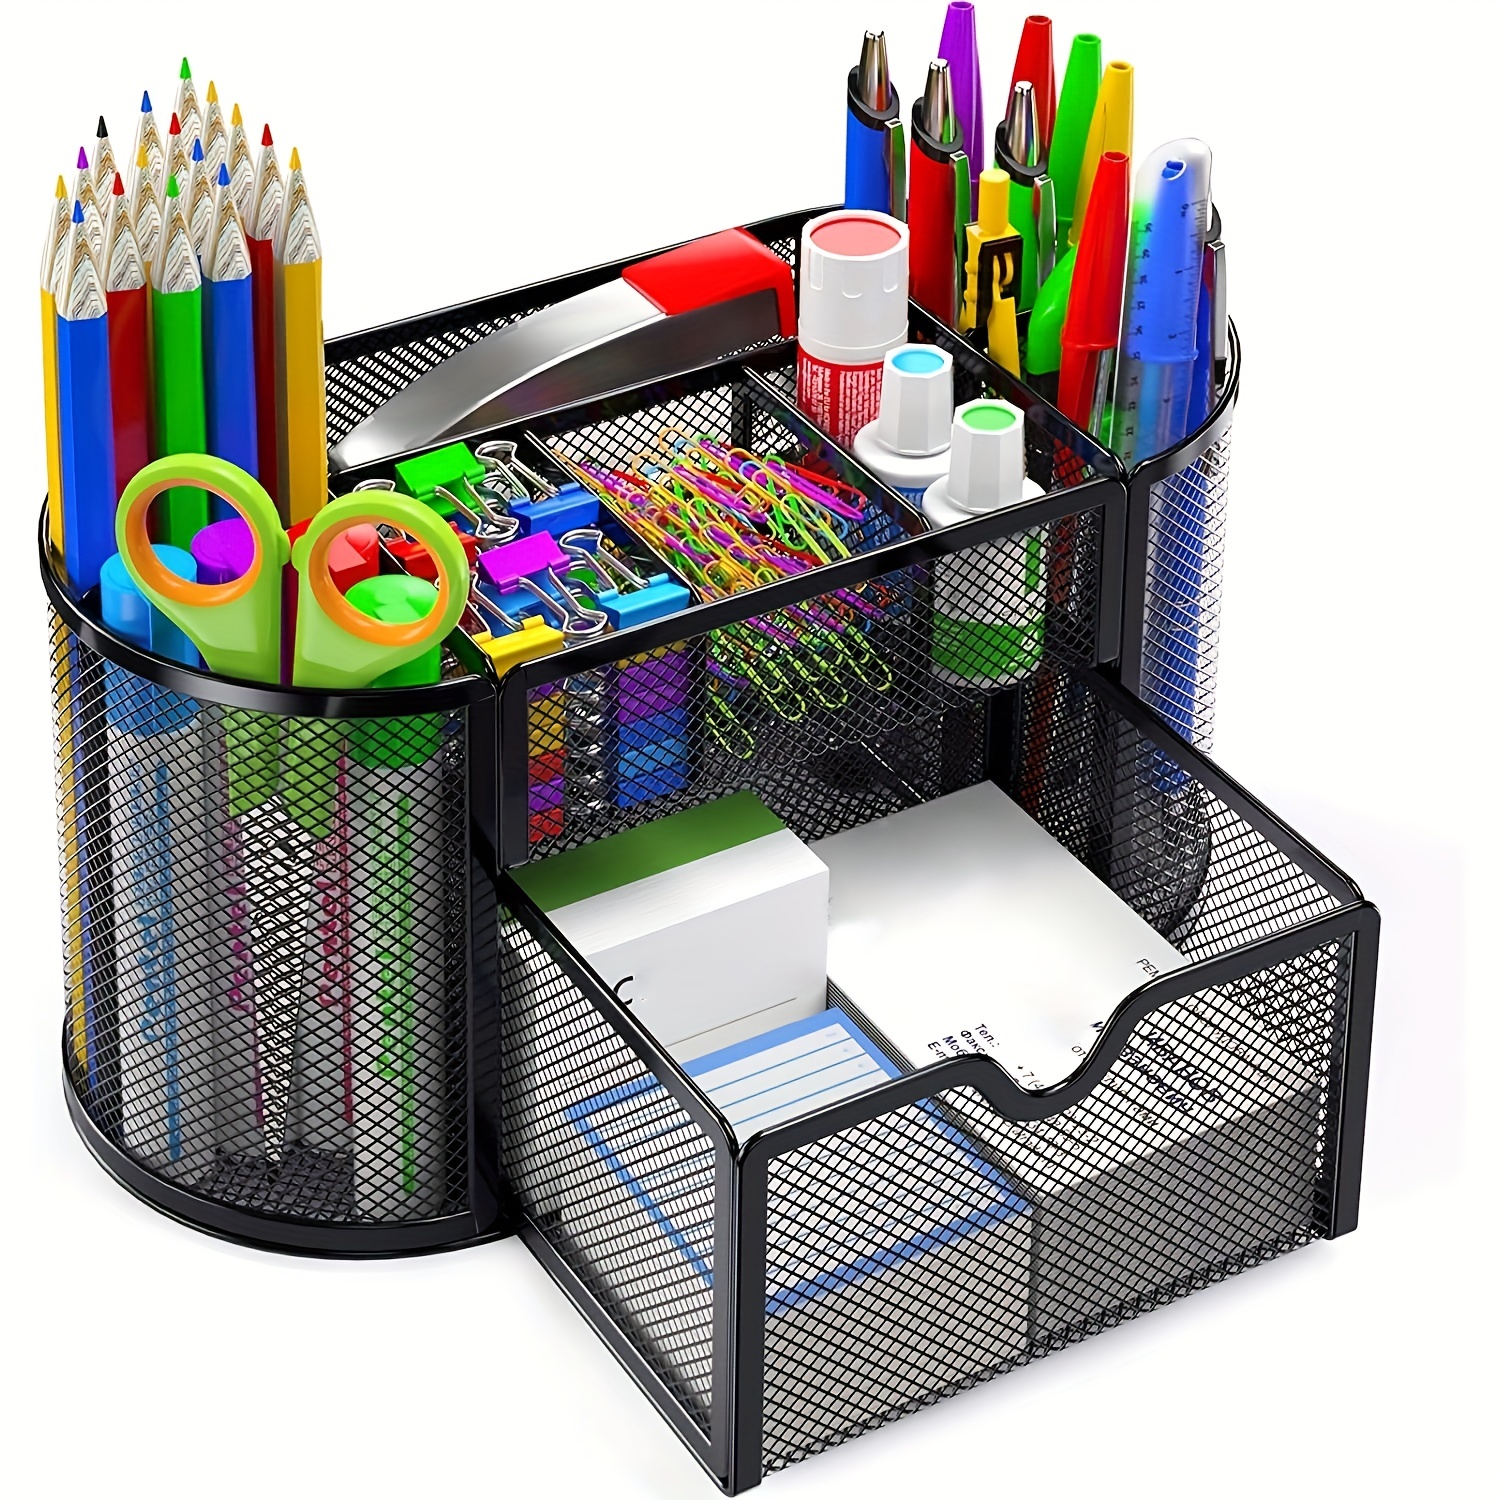   Basics Desk Drawer Organizer for Office and